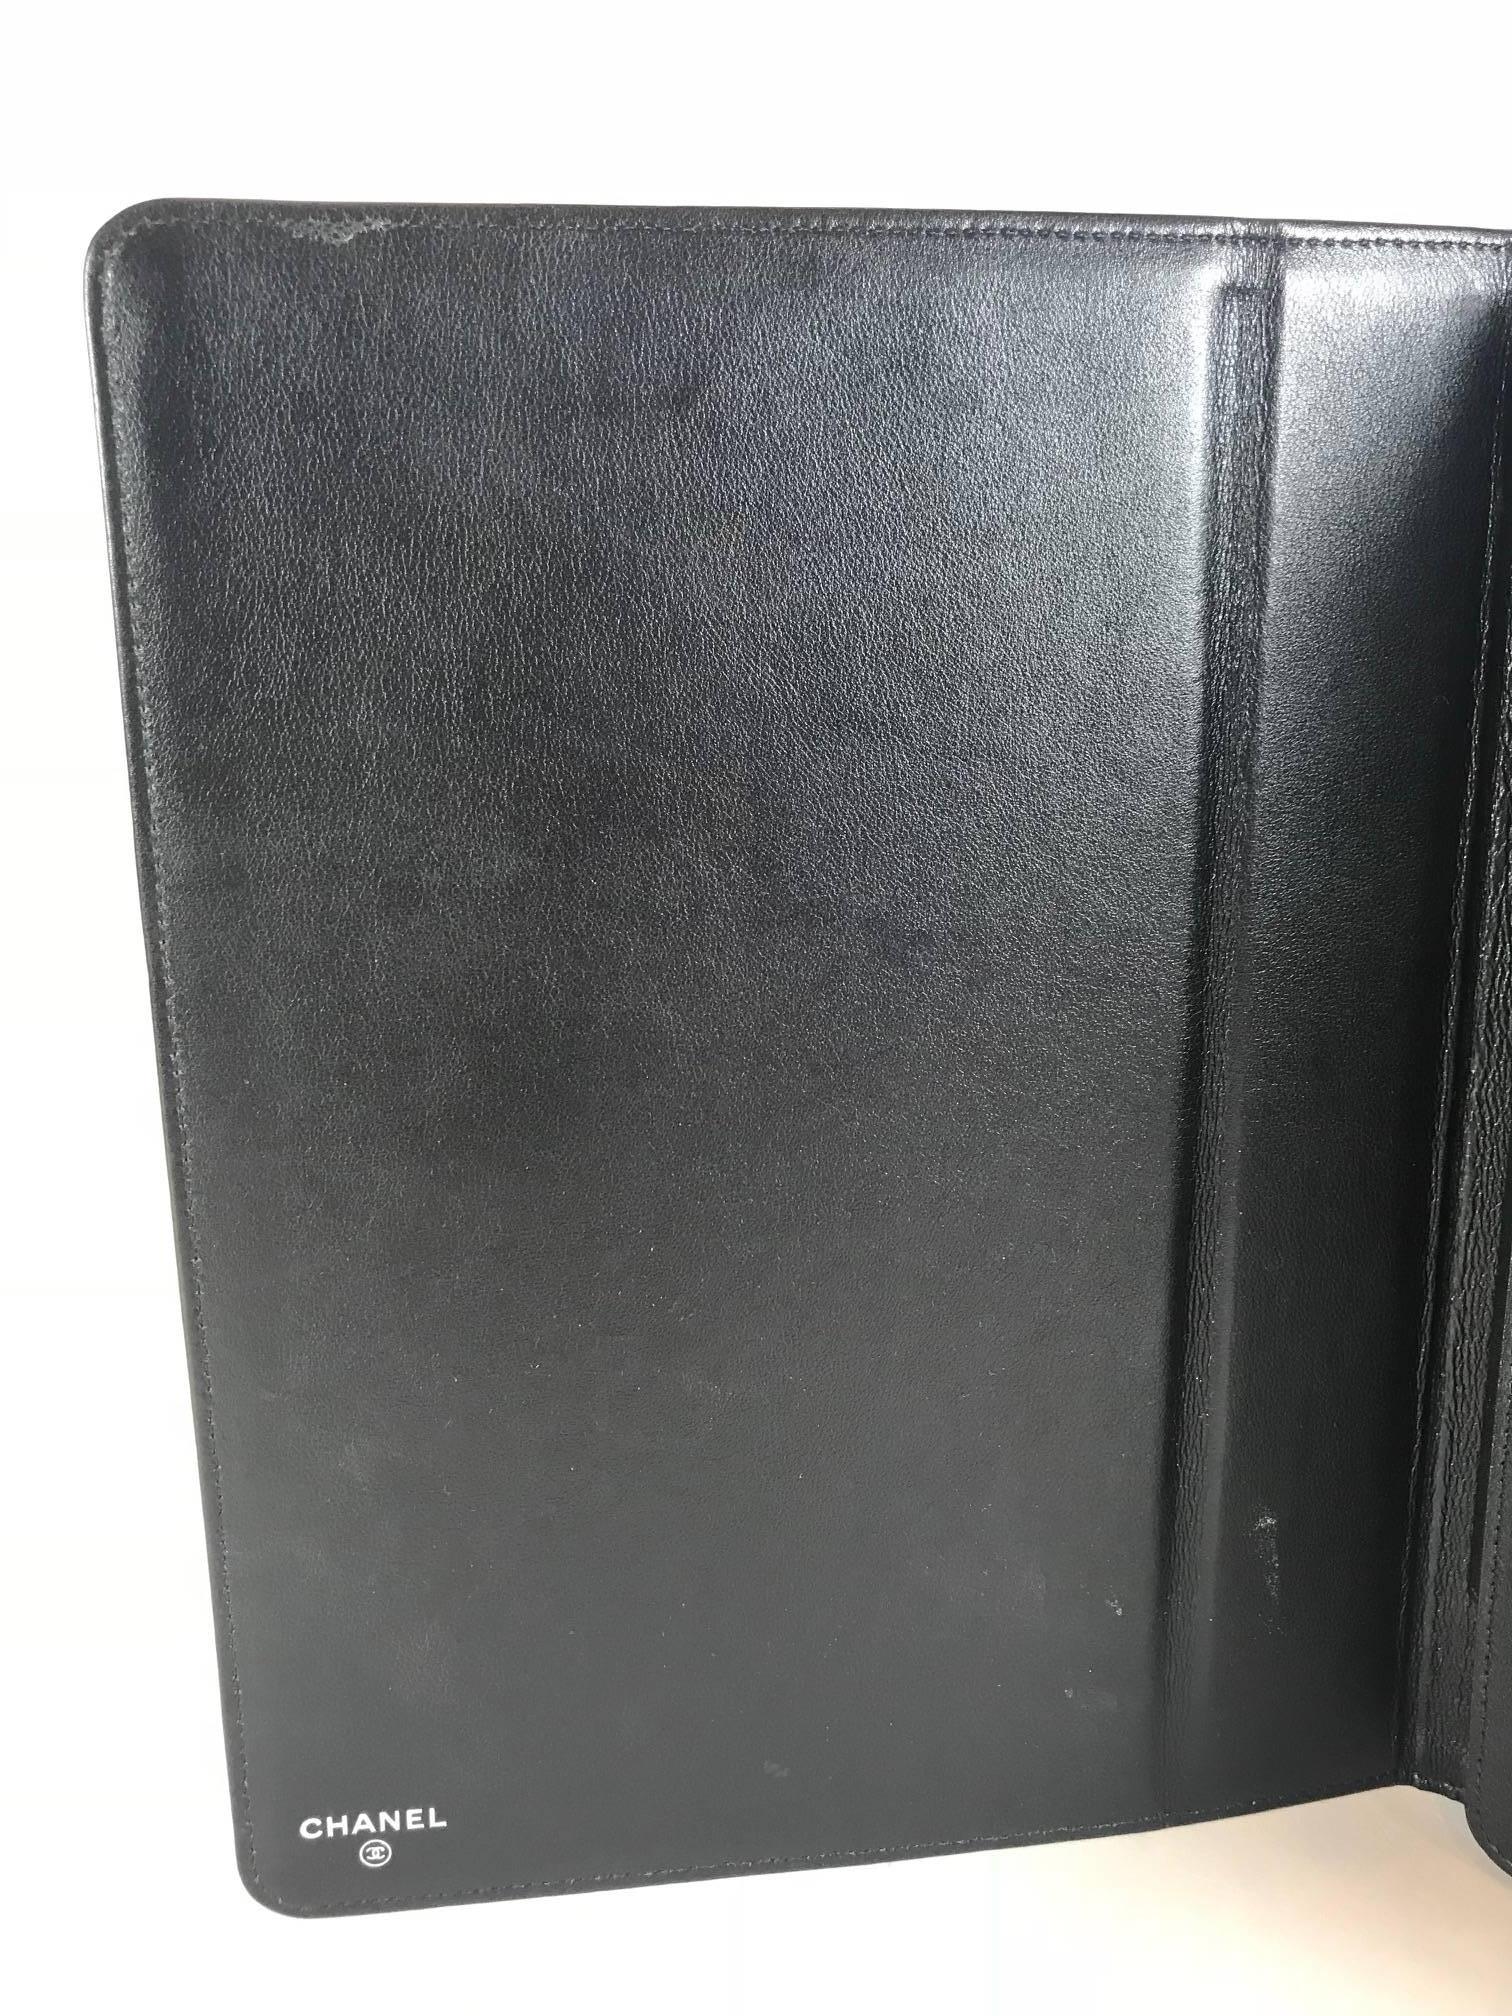 Chanel Black Ipad Case Holder 2